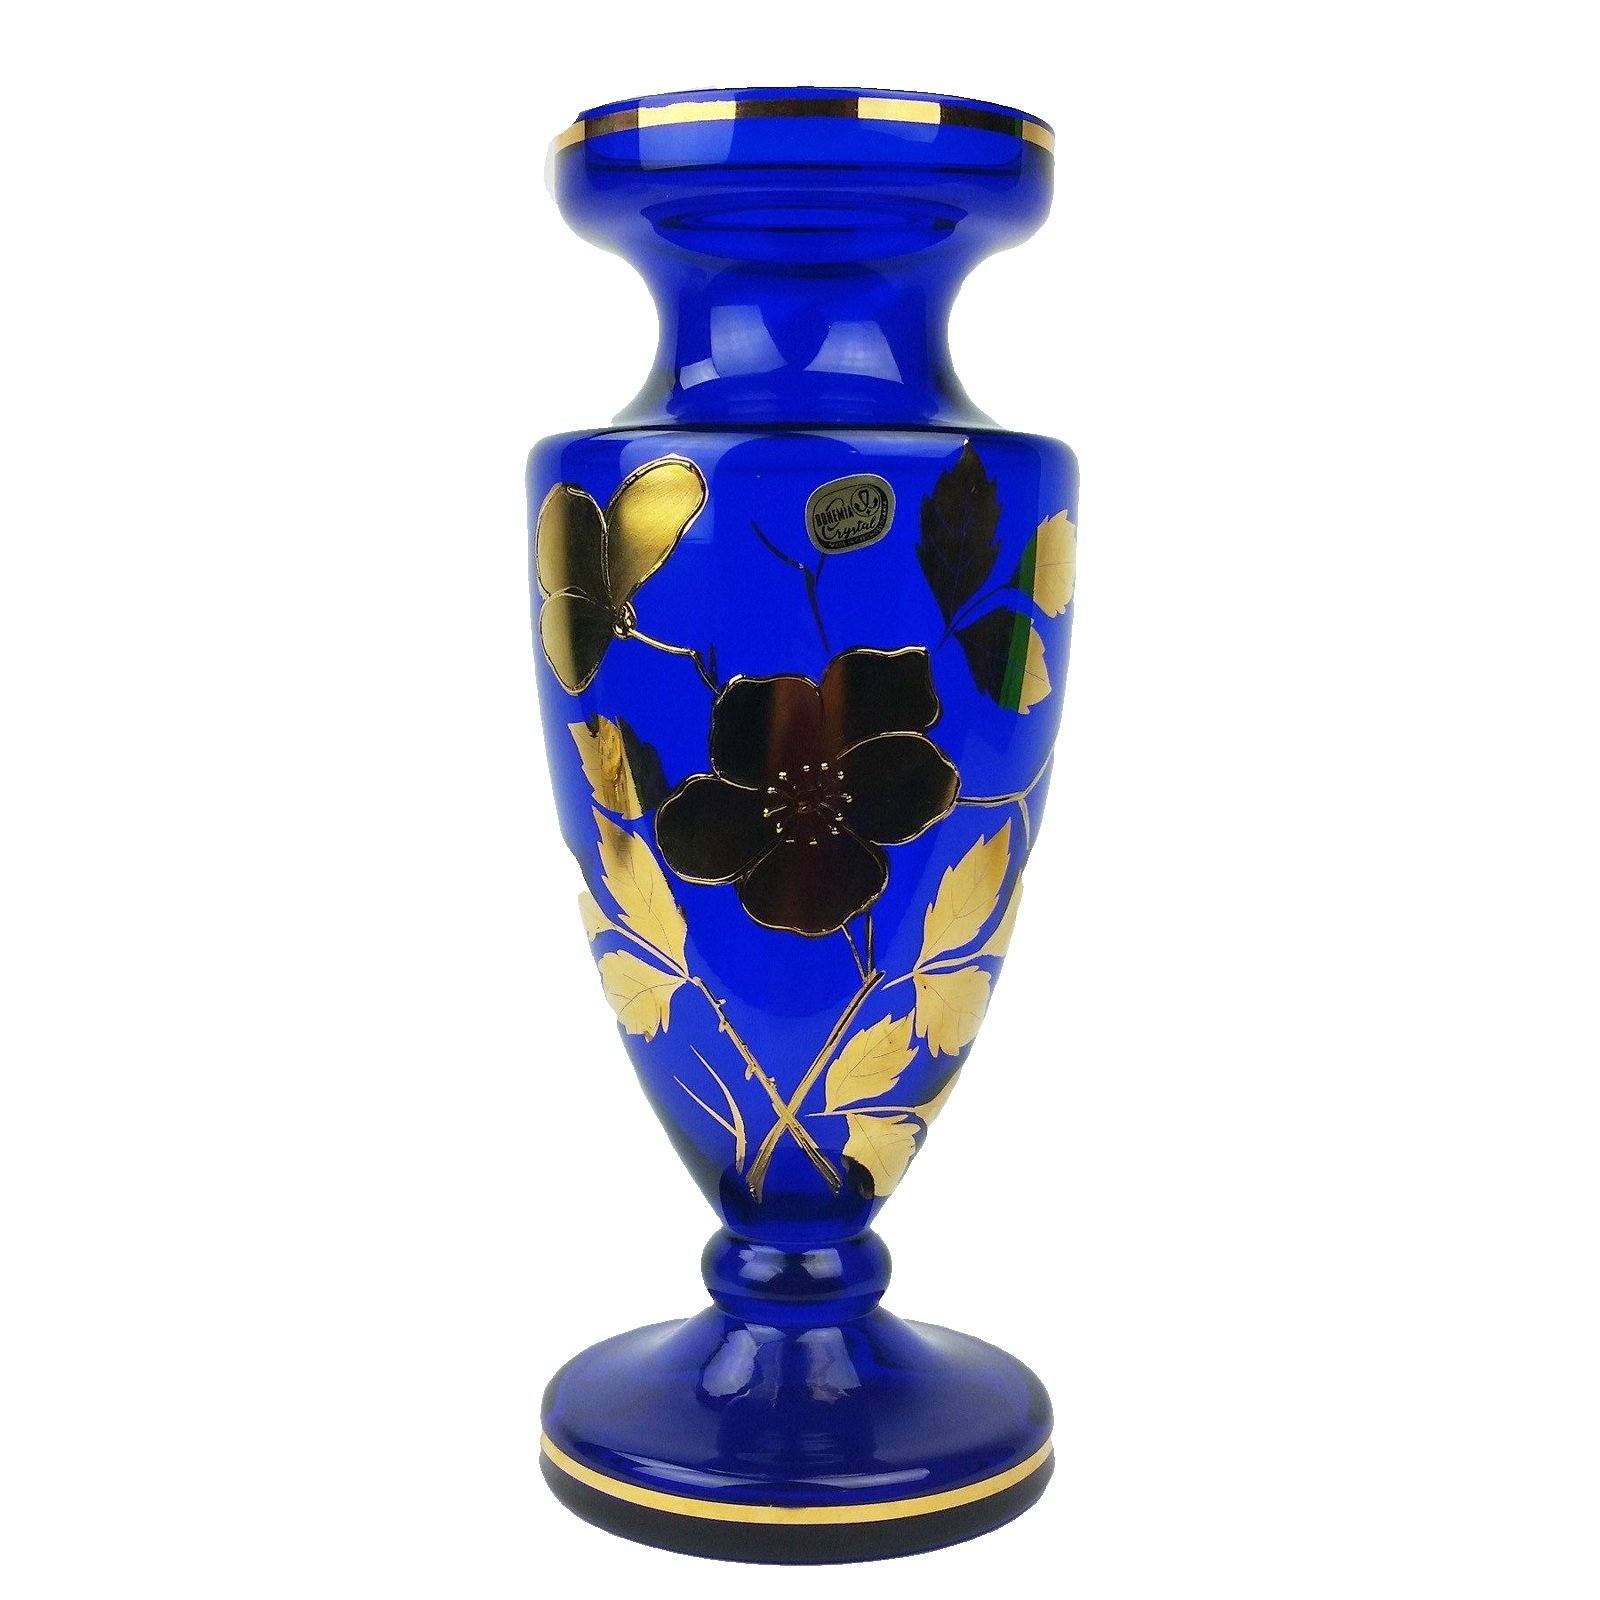 Beautiful Bohemia Crystal Vase! Czech Lead Cyrstal Vase